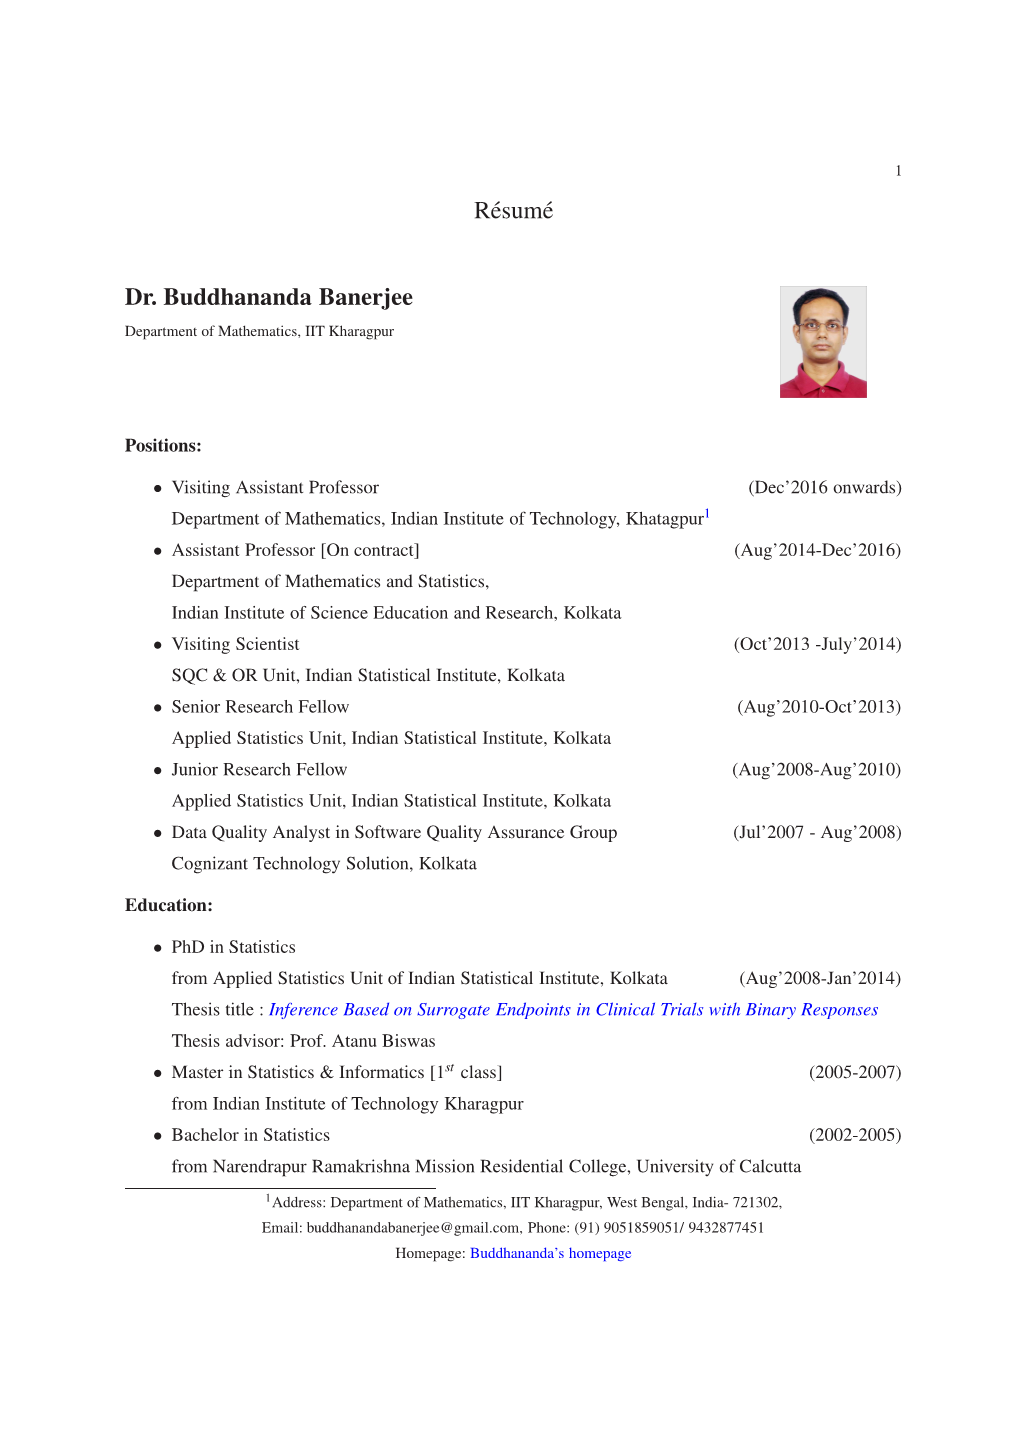 Résumé Dr. Buddhananda Banerjee